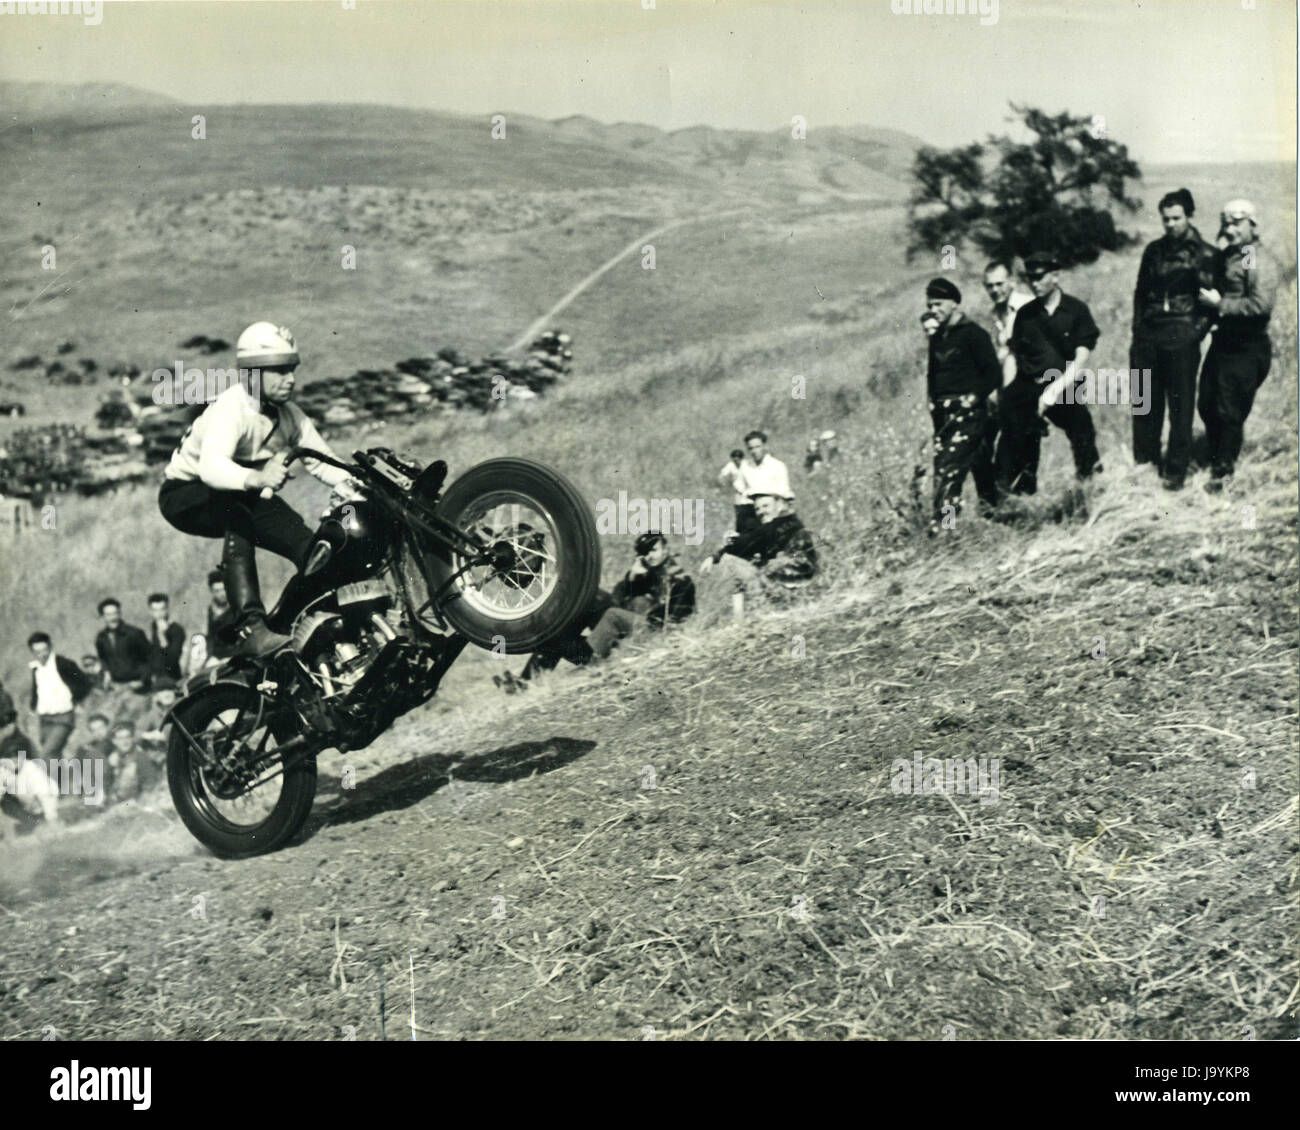 Santa Clara County, California, April 5, 1940-Members of a Motorcycle Club prepare to race in a hill climb. Stock Photo